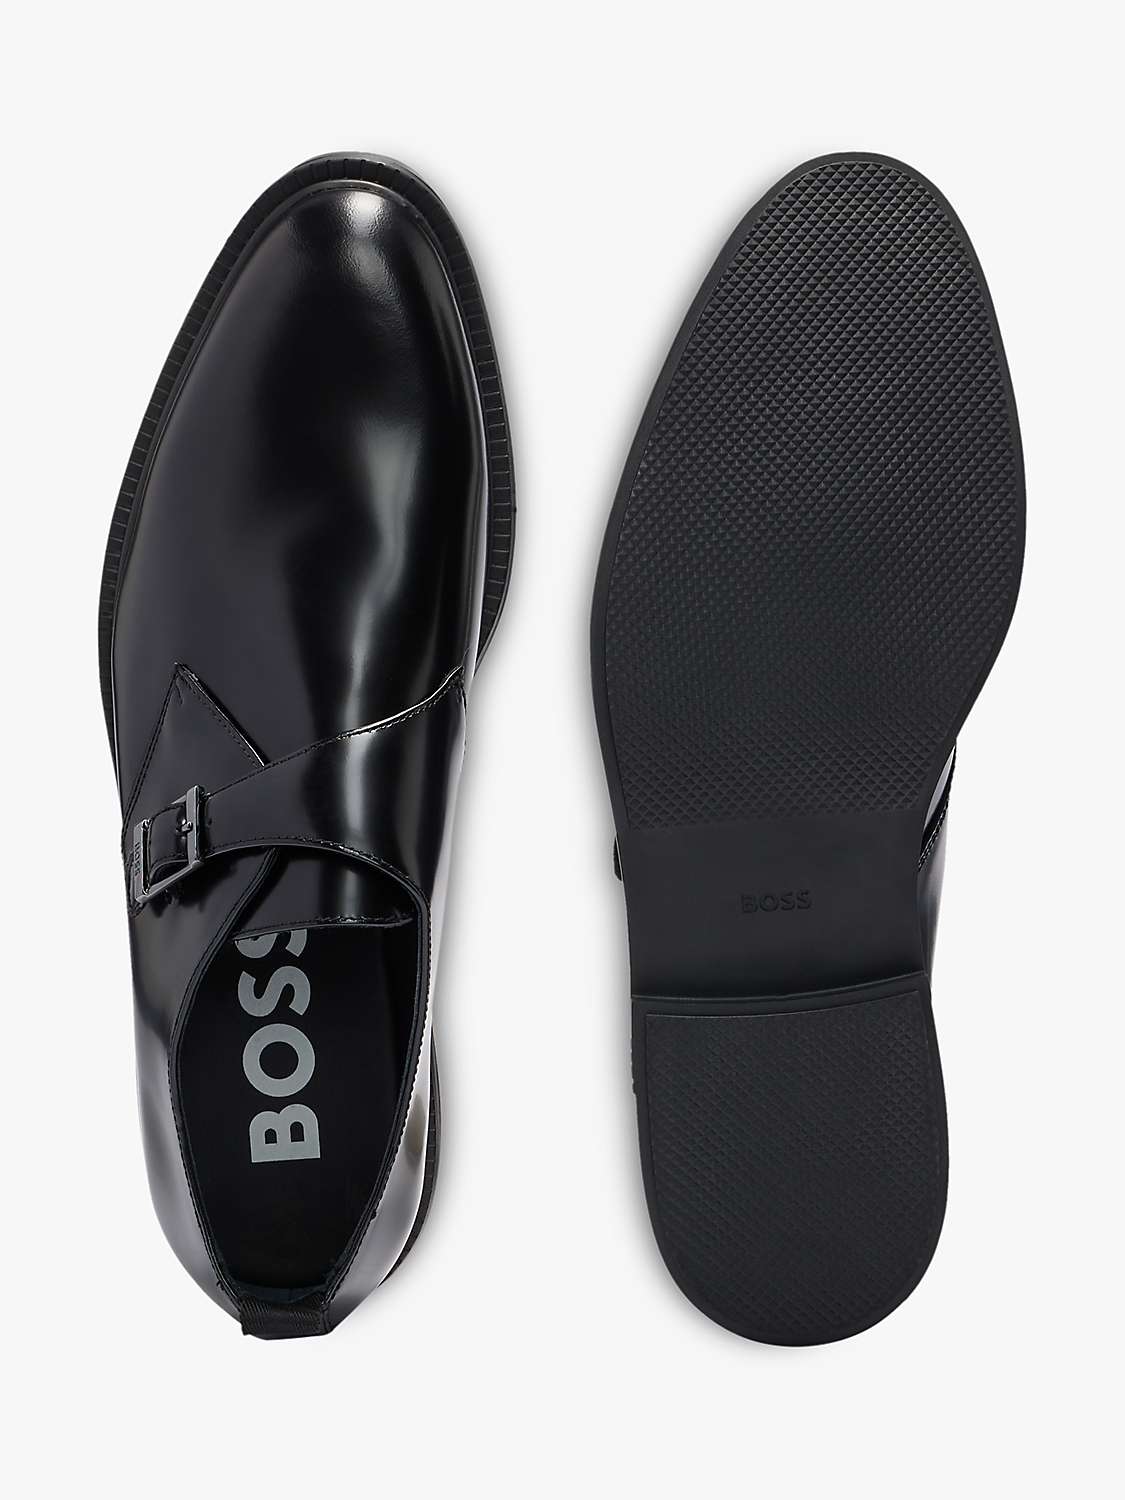 HUGO BOSS Larry Leather Monk Shoes, Black at John Lewis & Partners